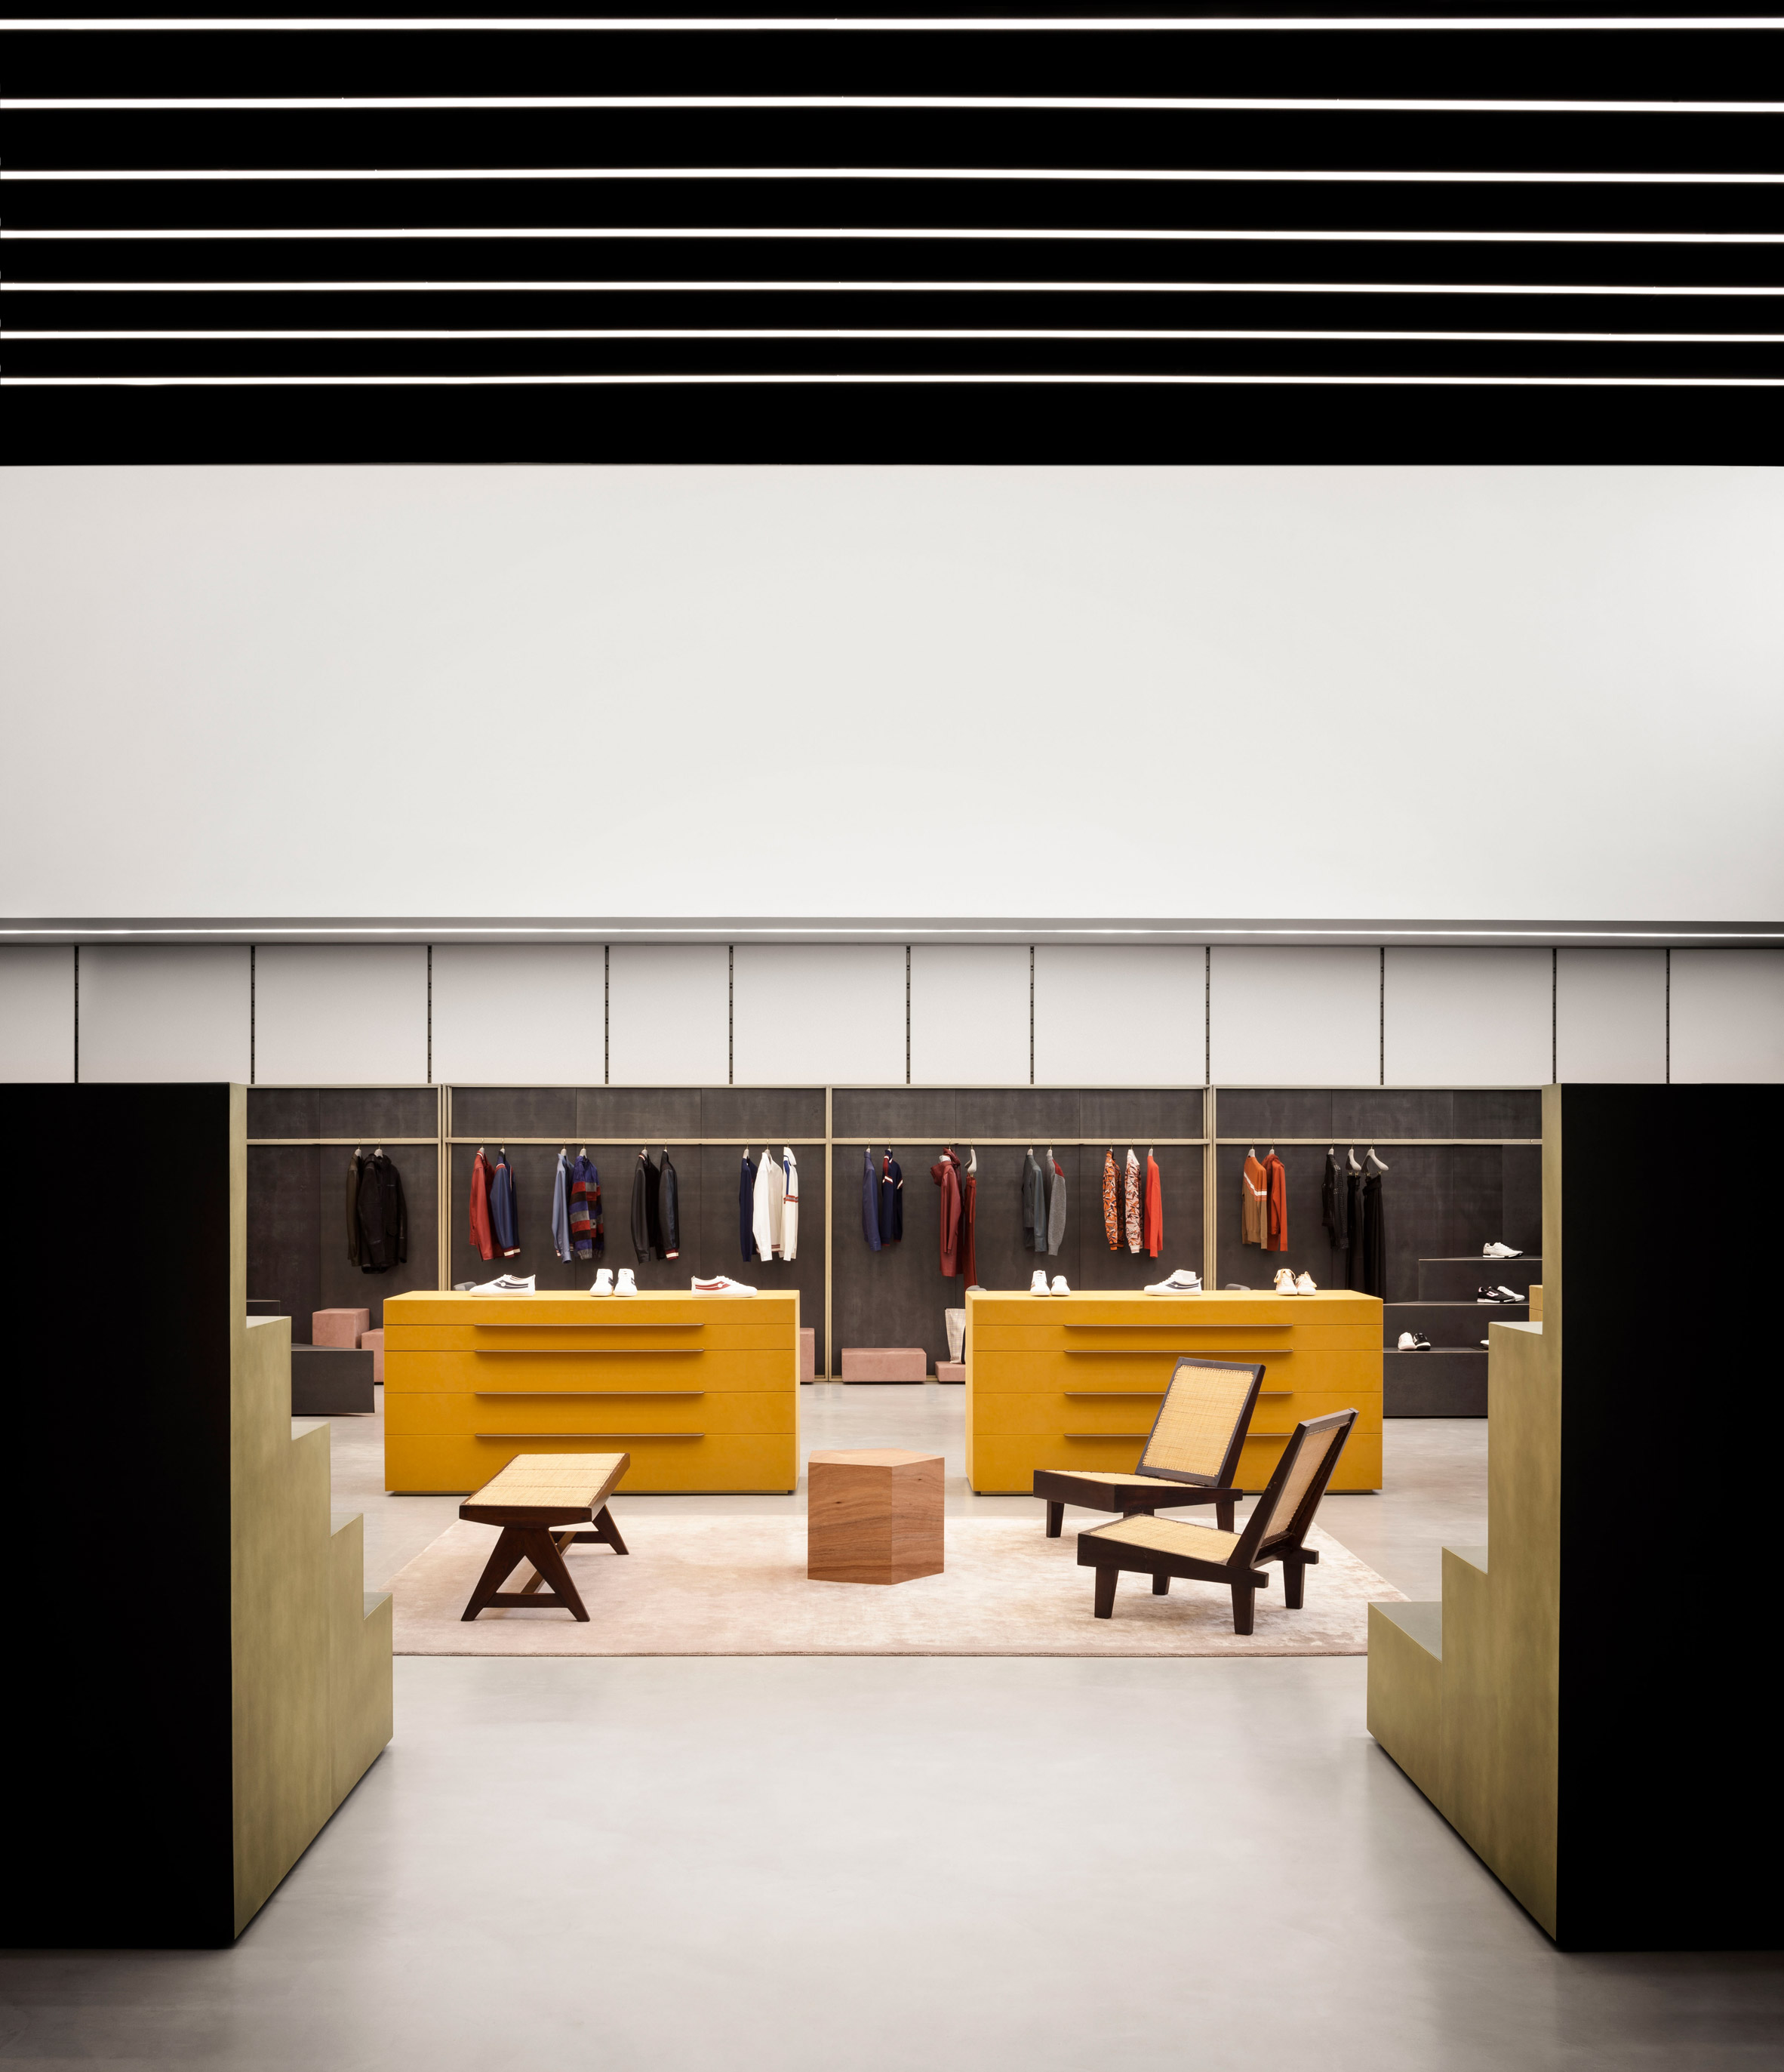 Interiors of Bally fashion store in Milan by Storage Associati